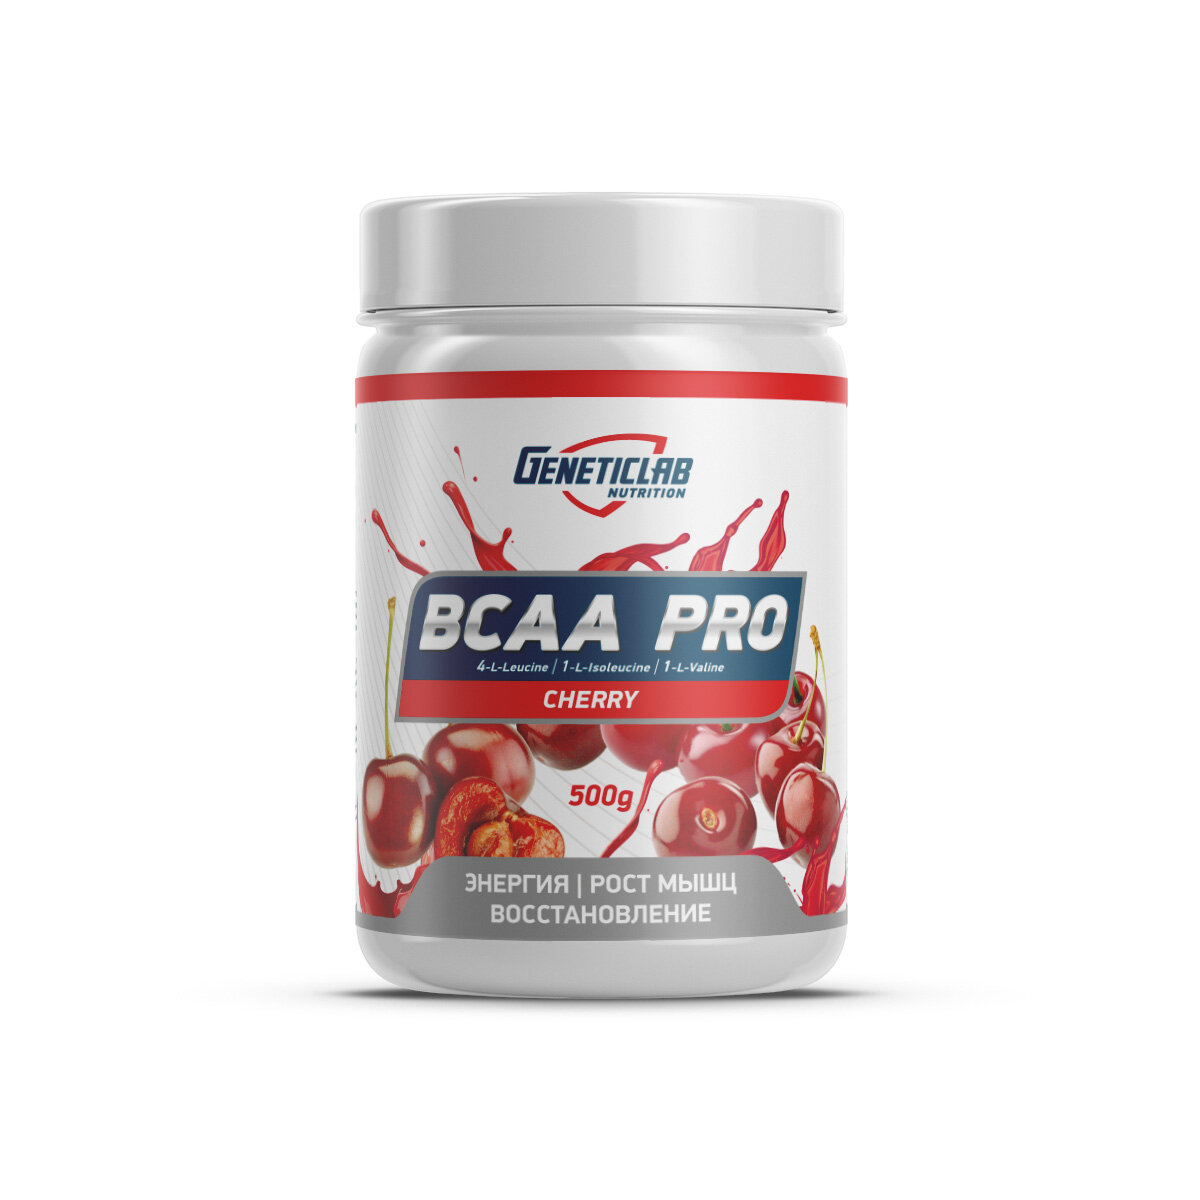 Аминокислоты BCAA (БЦАА), Geneticlab Nutrition, BCAA Pro, 500 г, Вишня